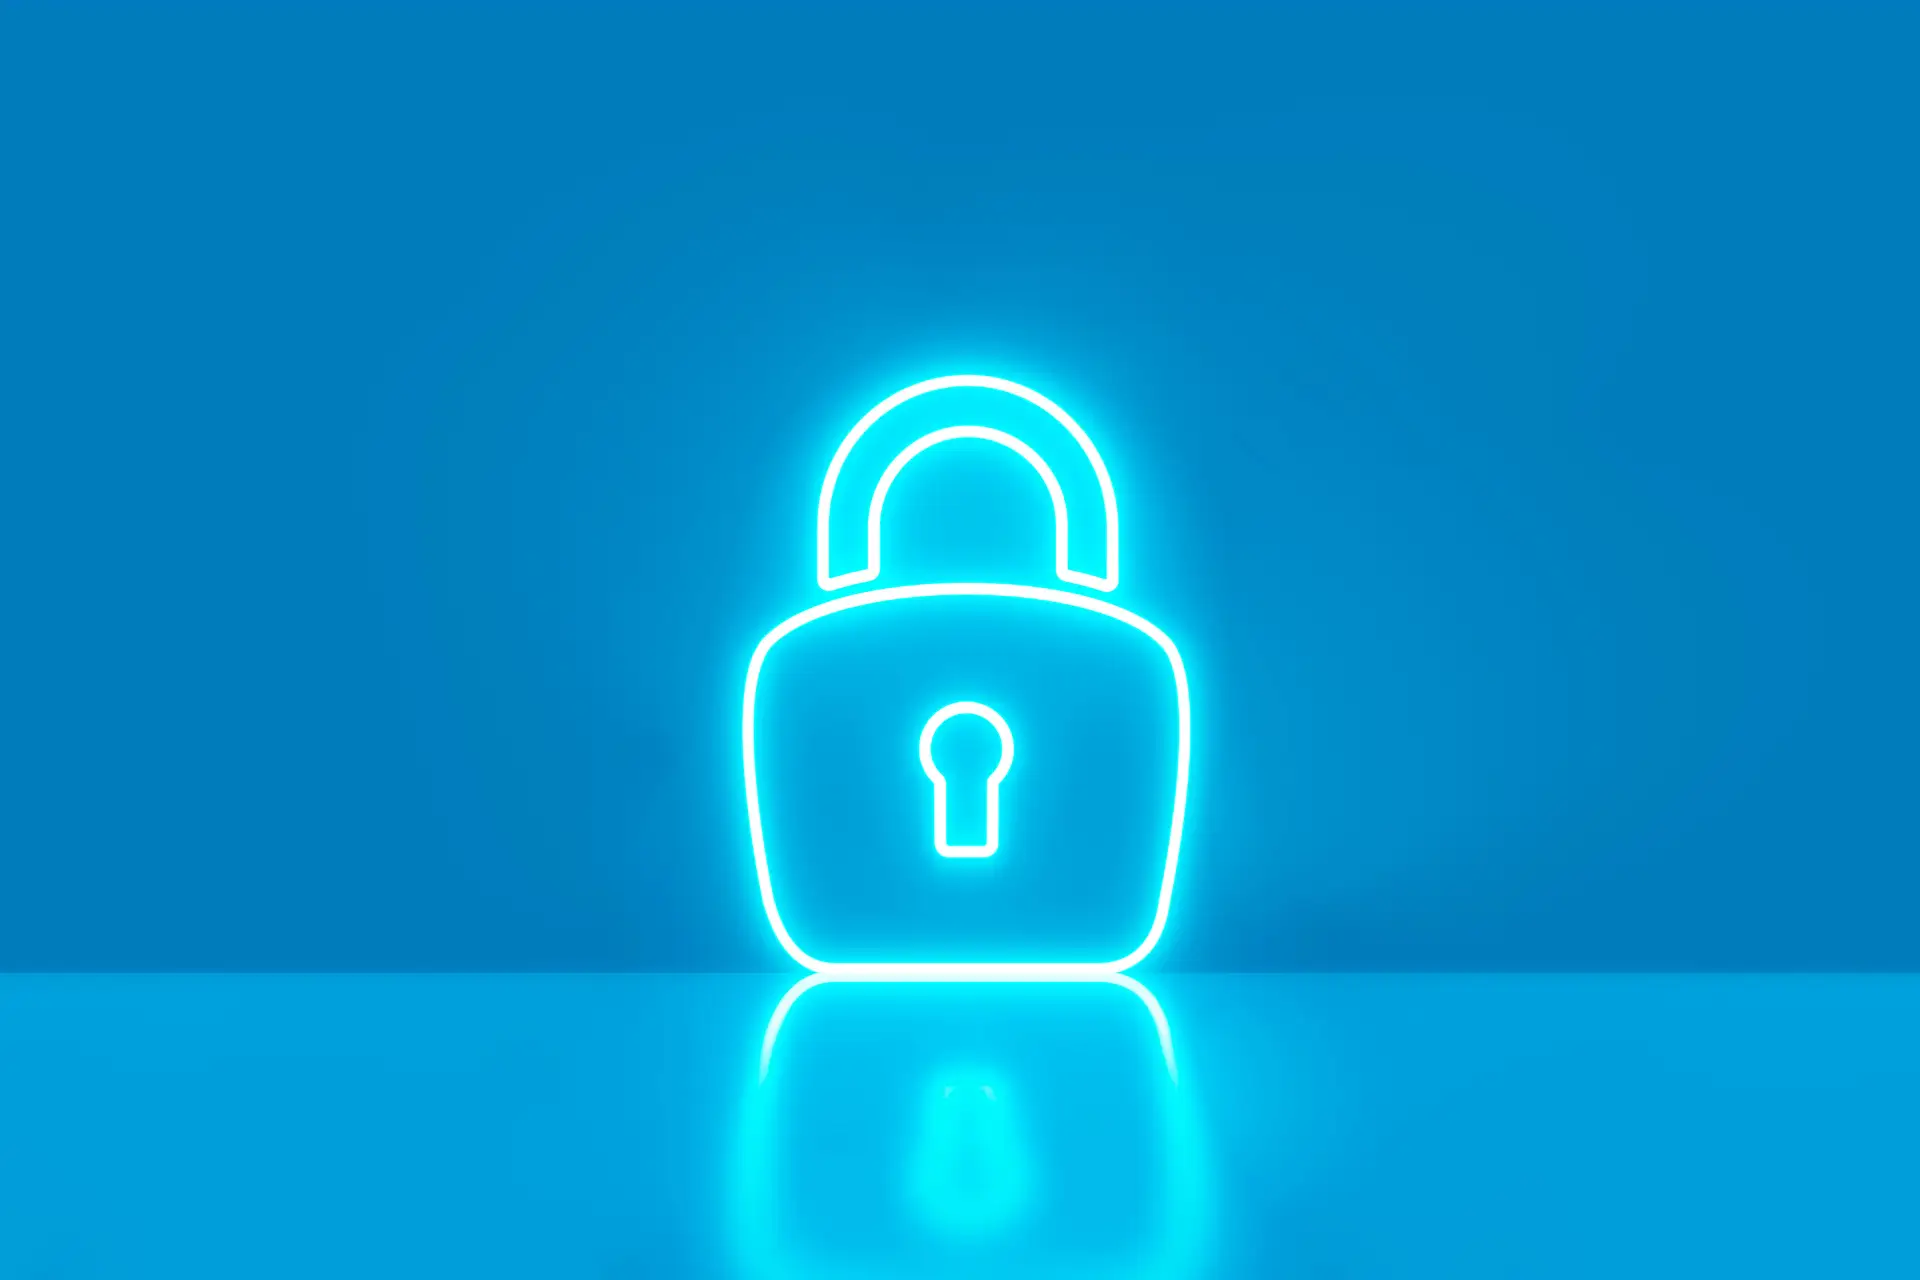 neon light blue padlock against neon blue background